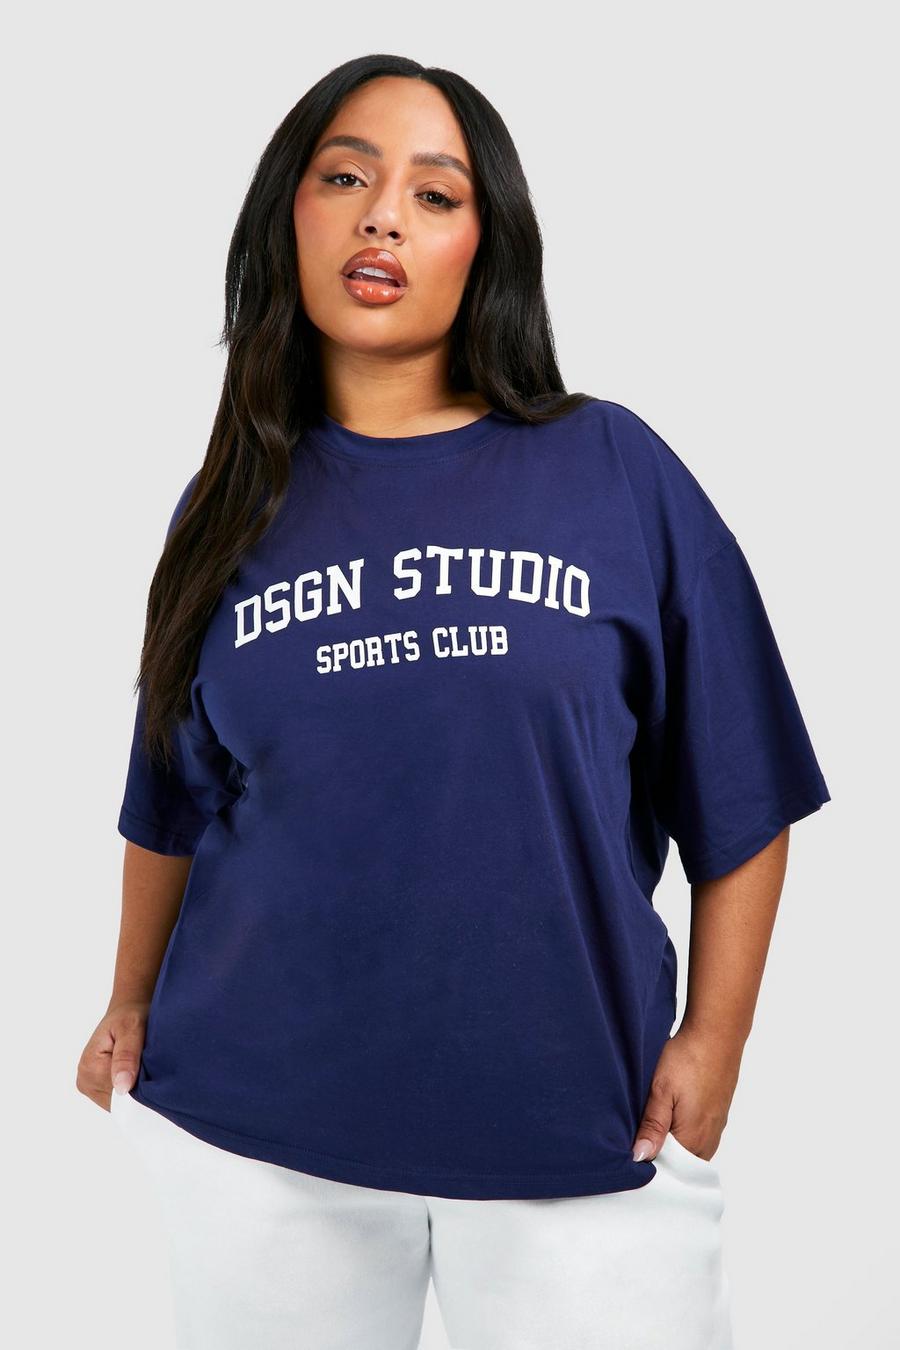 Navy Plus Oversized Dsgn Studio Sports Club T-Shirt